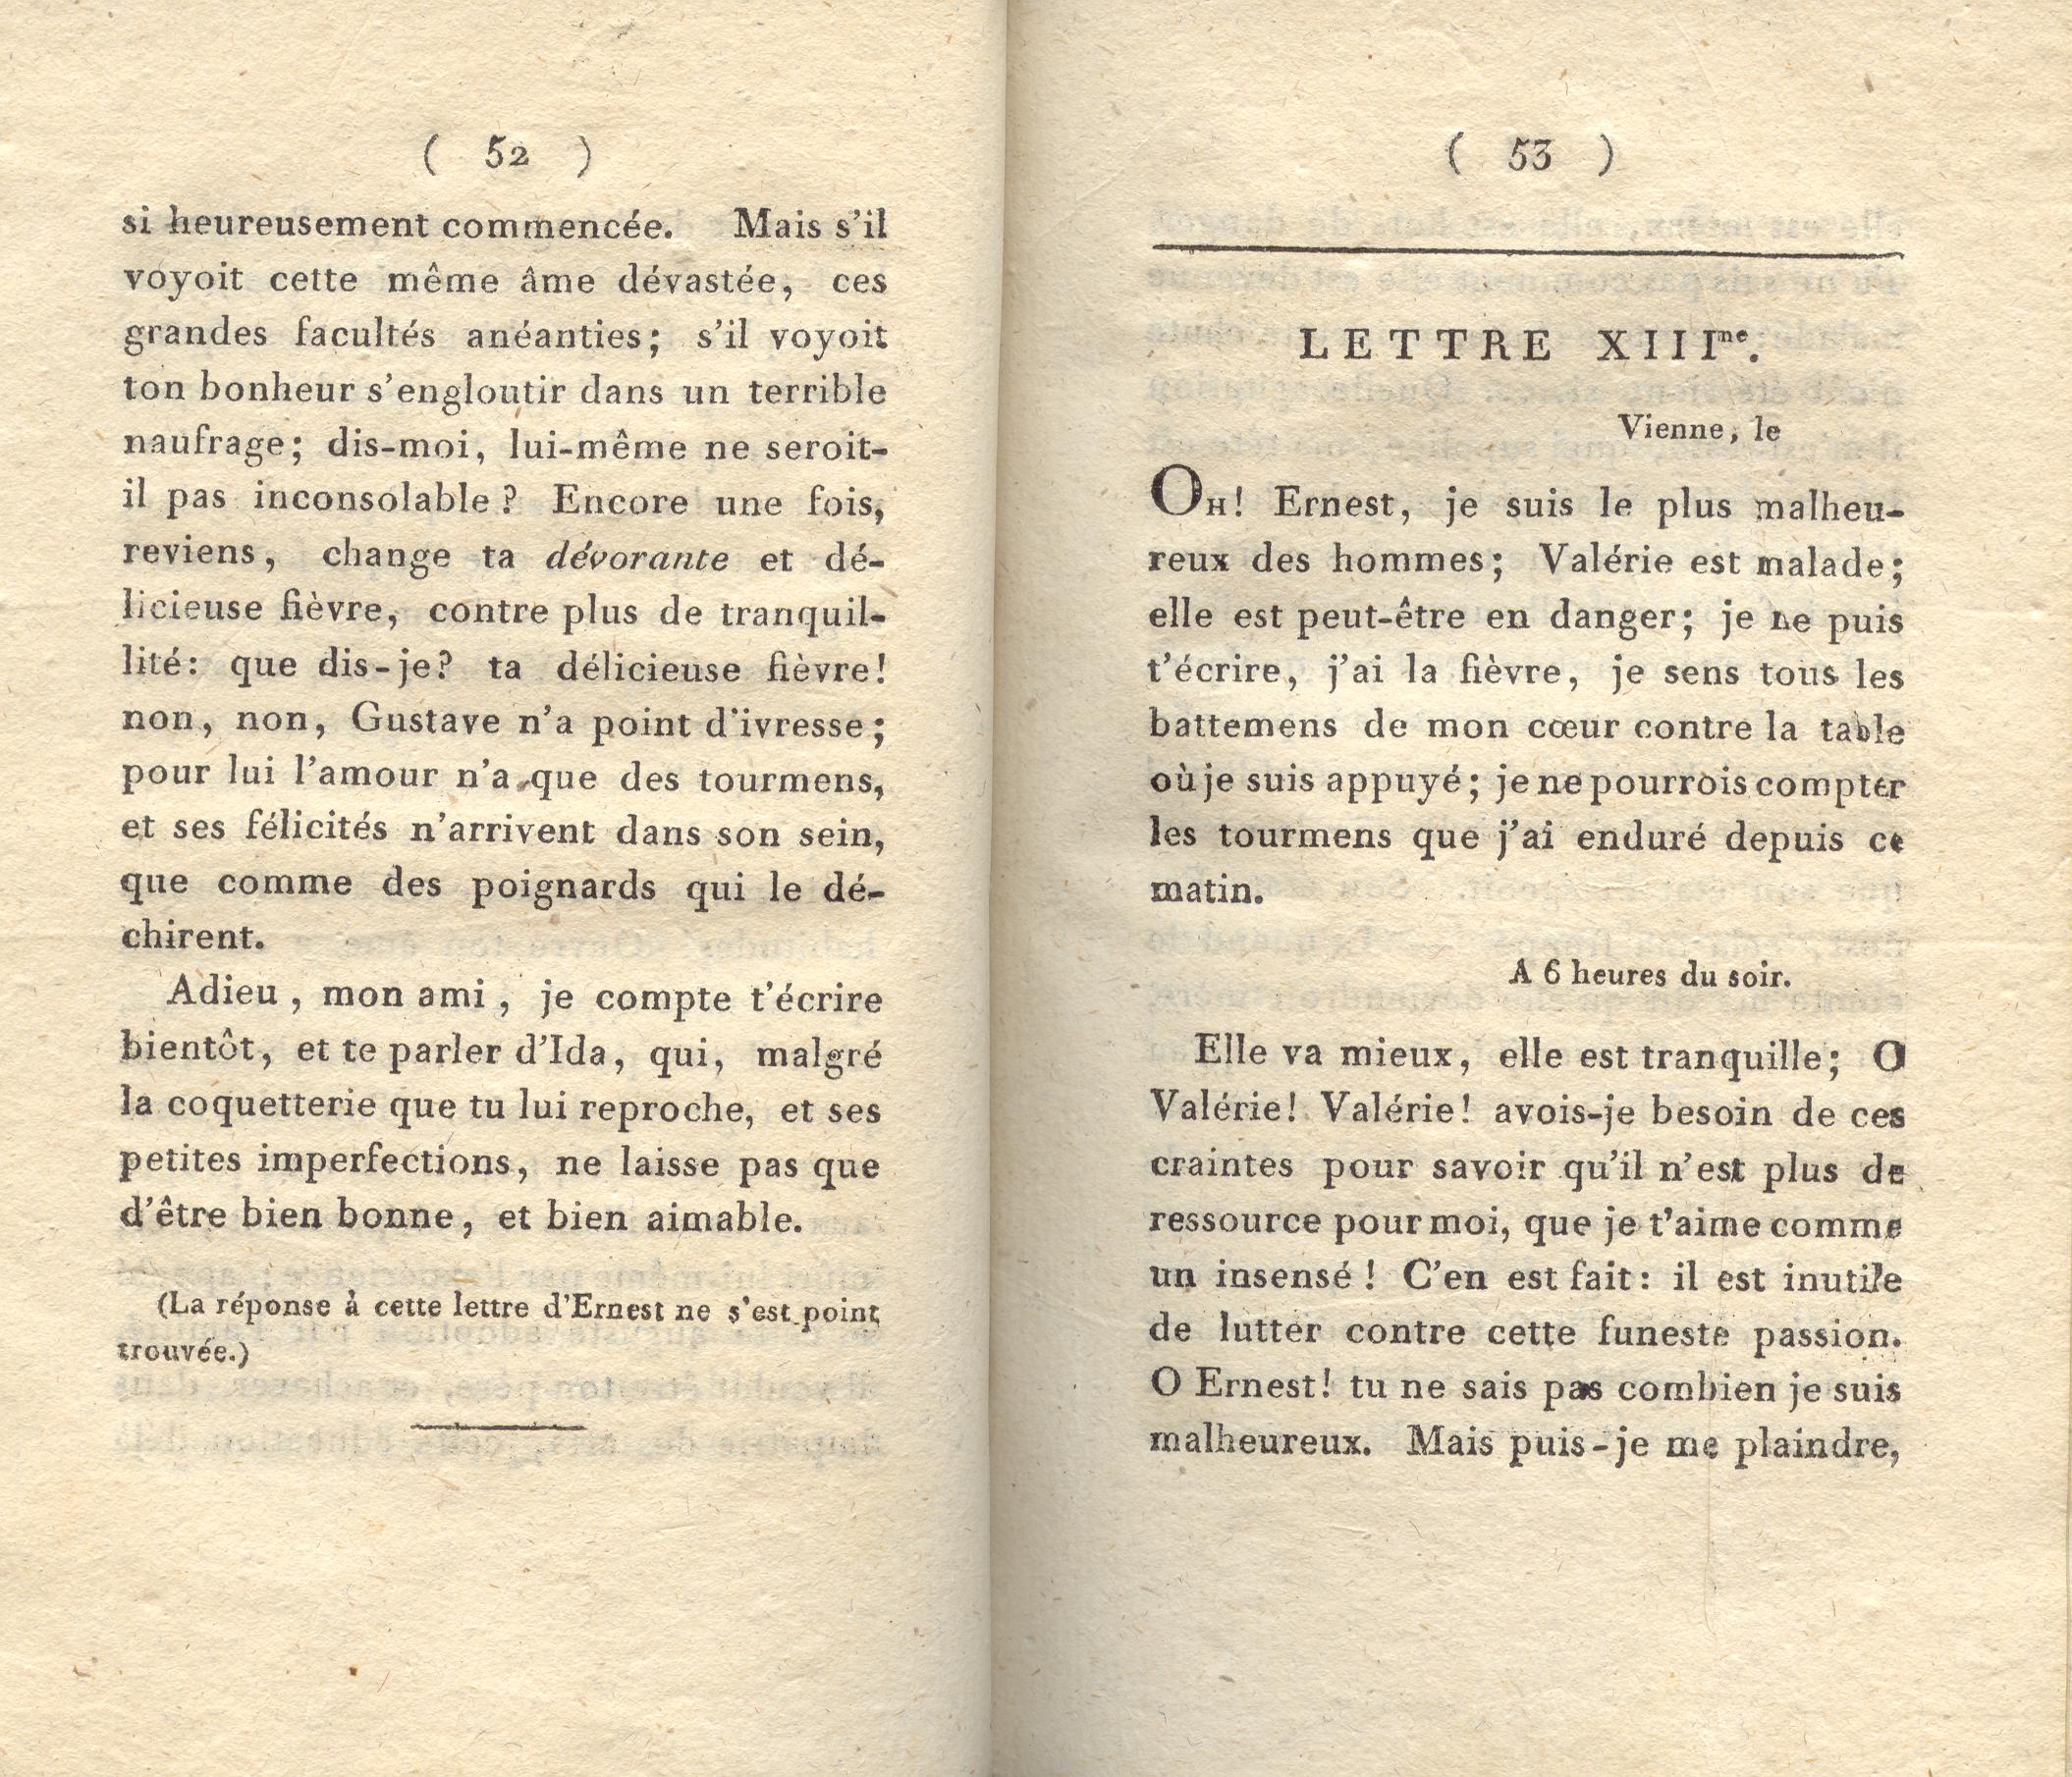 Valérie (1804) | 33. (52-53) Main body of text